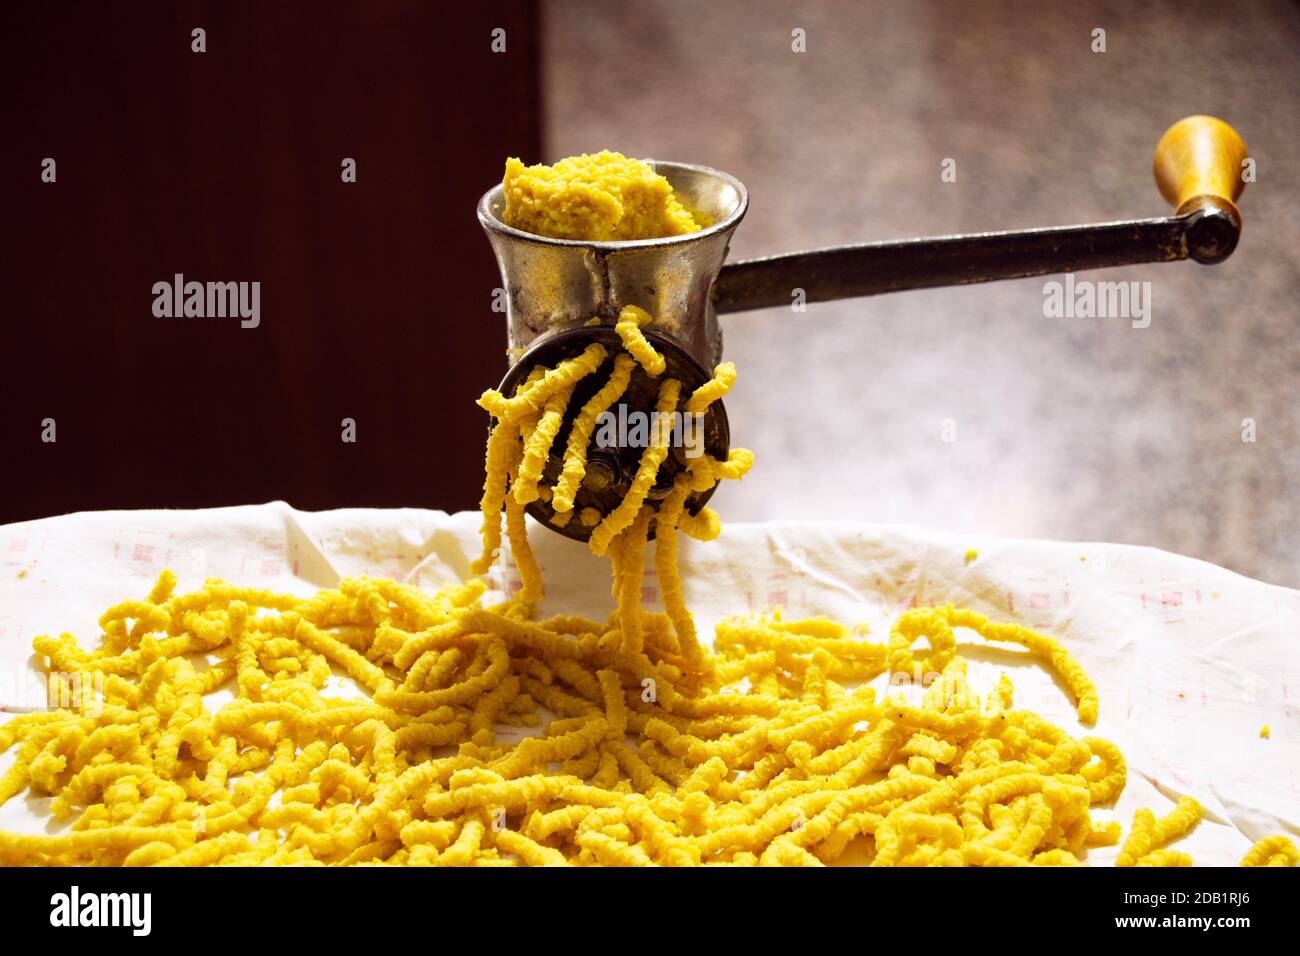 Making passatelli traditional italian pasta of Modena. concept for food and cooking, hobby during coronavirus lockdown Stock Photo